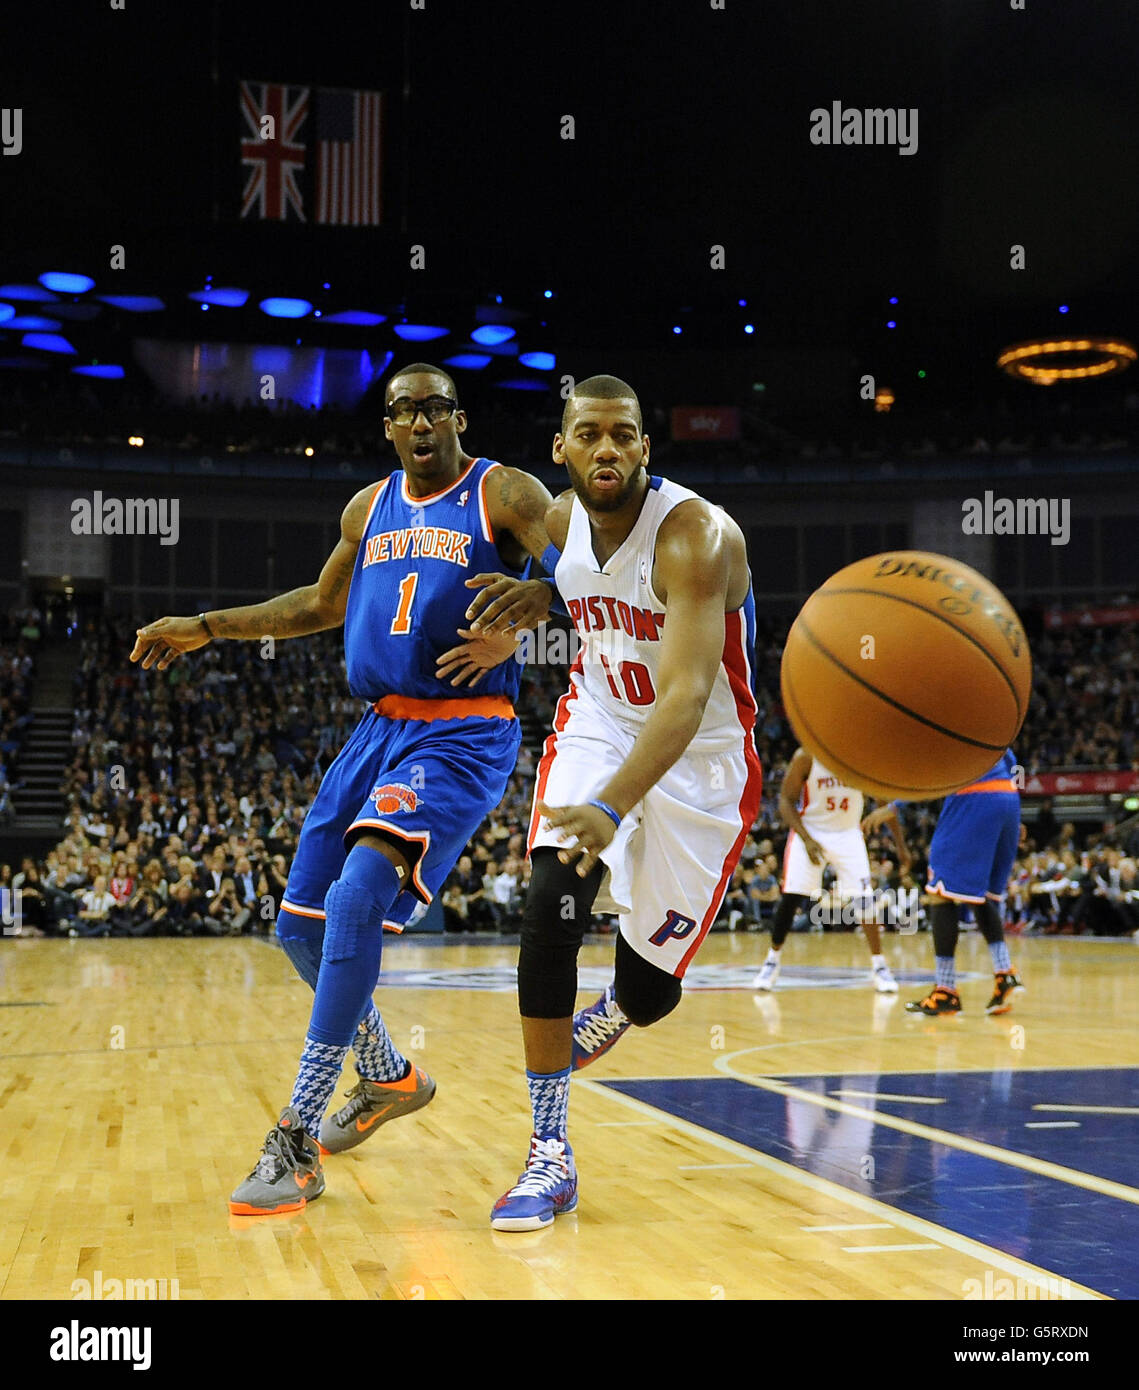 New York Knicks' Amar'e Stoudemire (links) und Detroit Pistons' Greg Monroe während des NBA London Live Spiels 2013 in der O2 Arena, London. Stockfoto